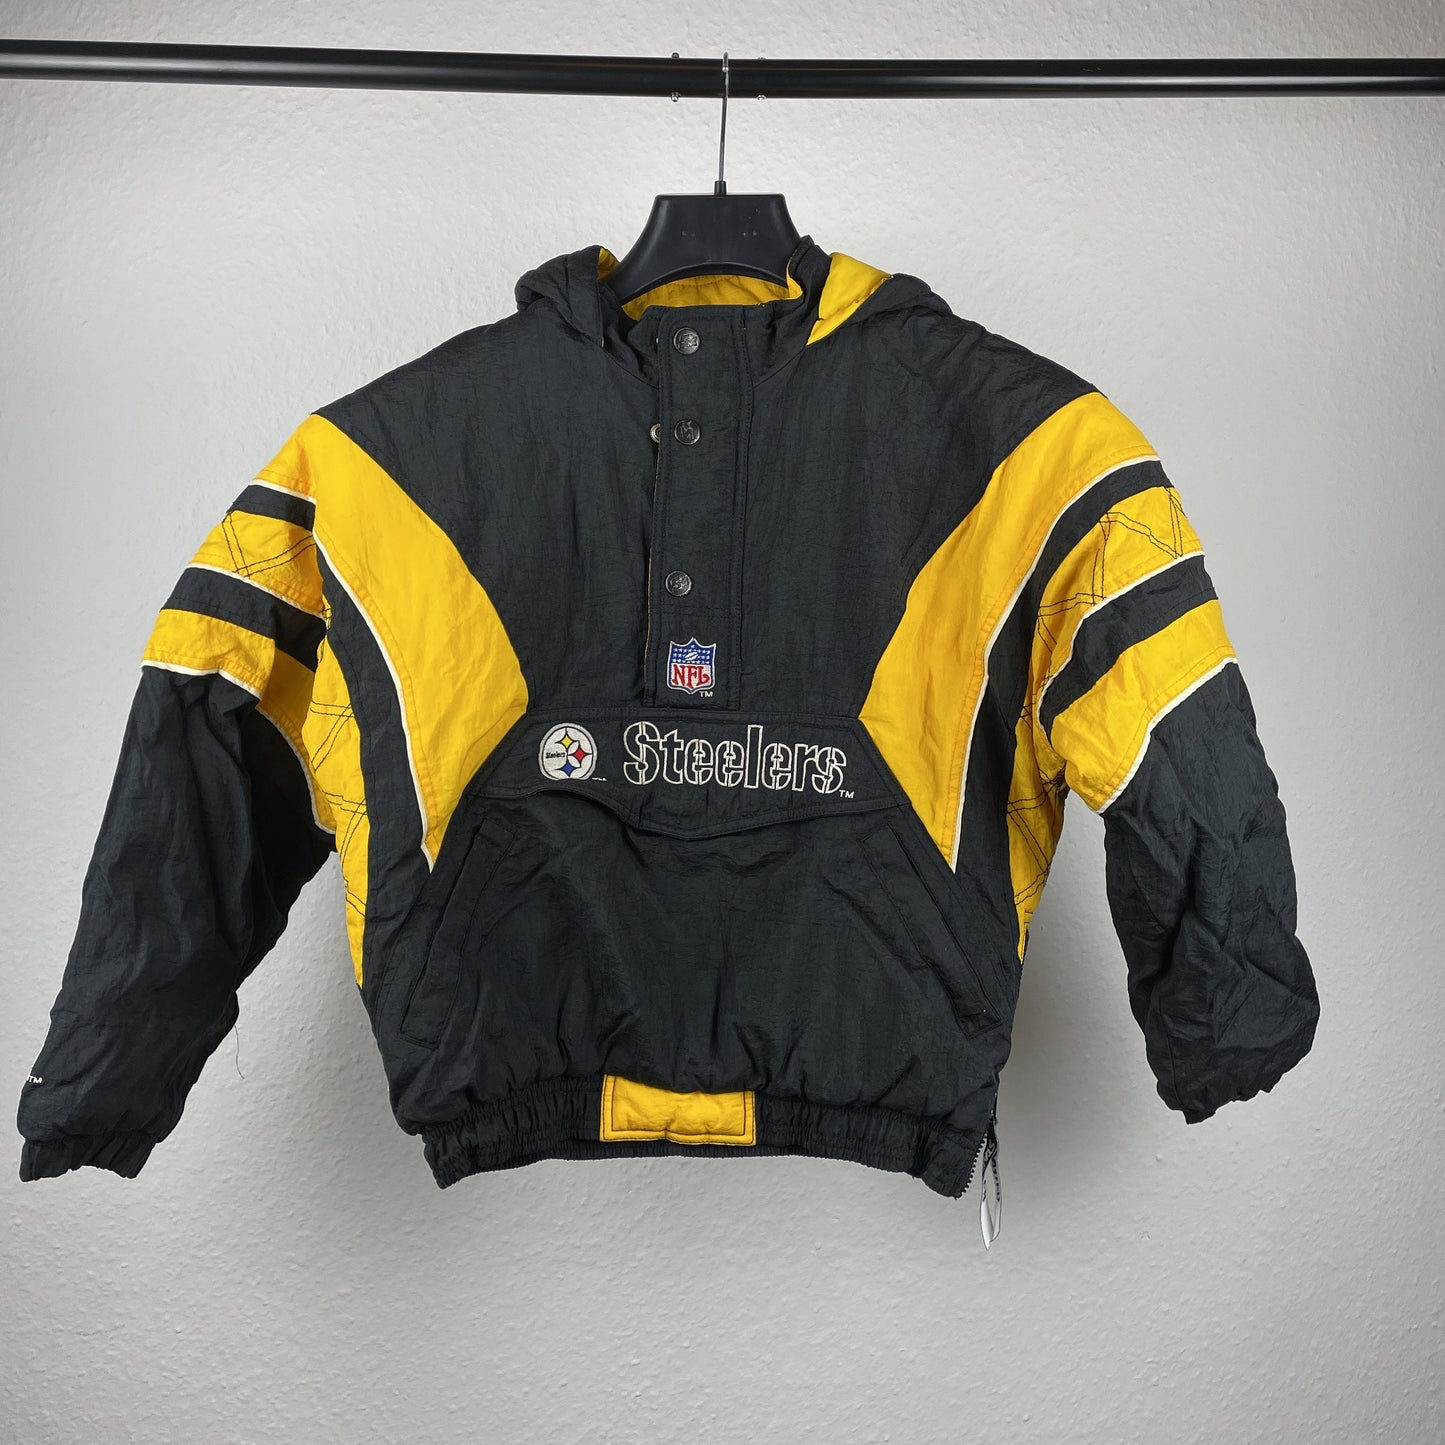 NFL Vintage Starter Jacke 90s Pittsburgh Steelers